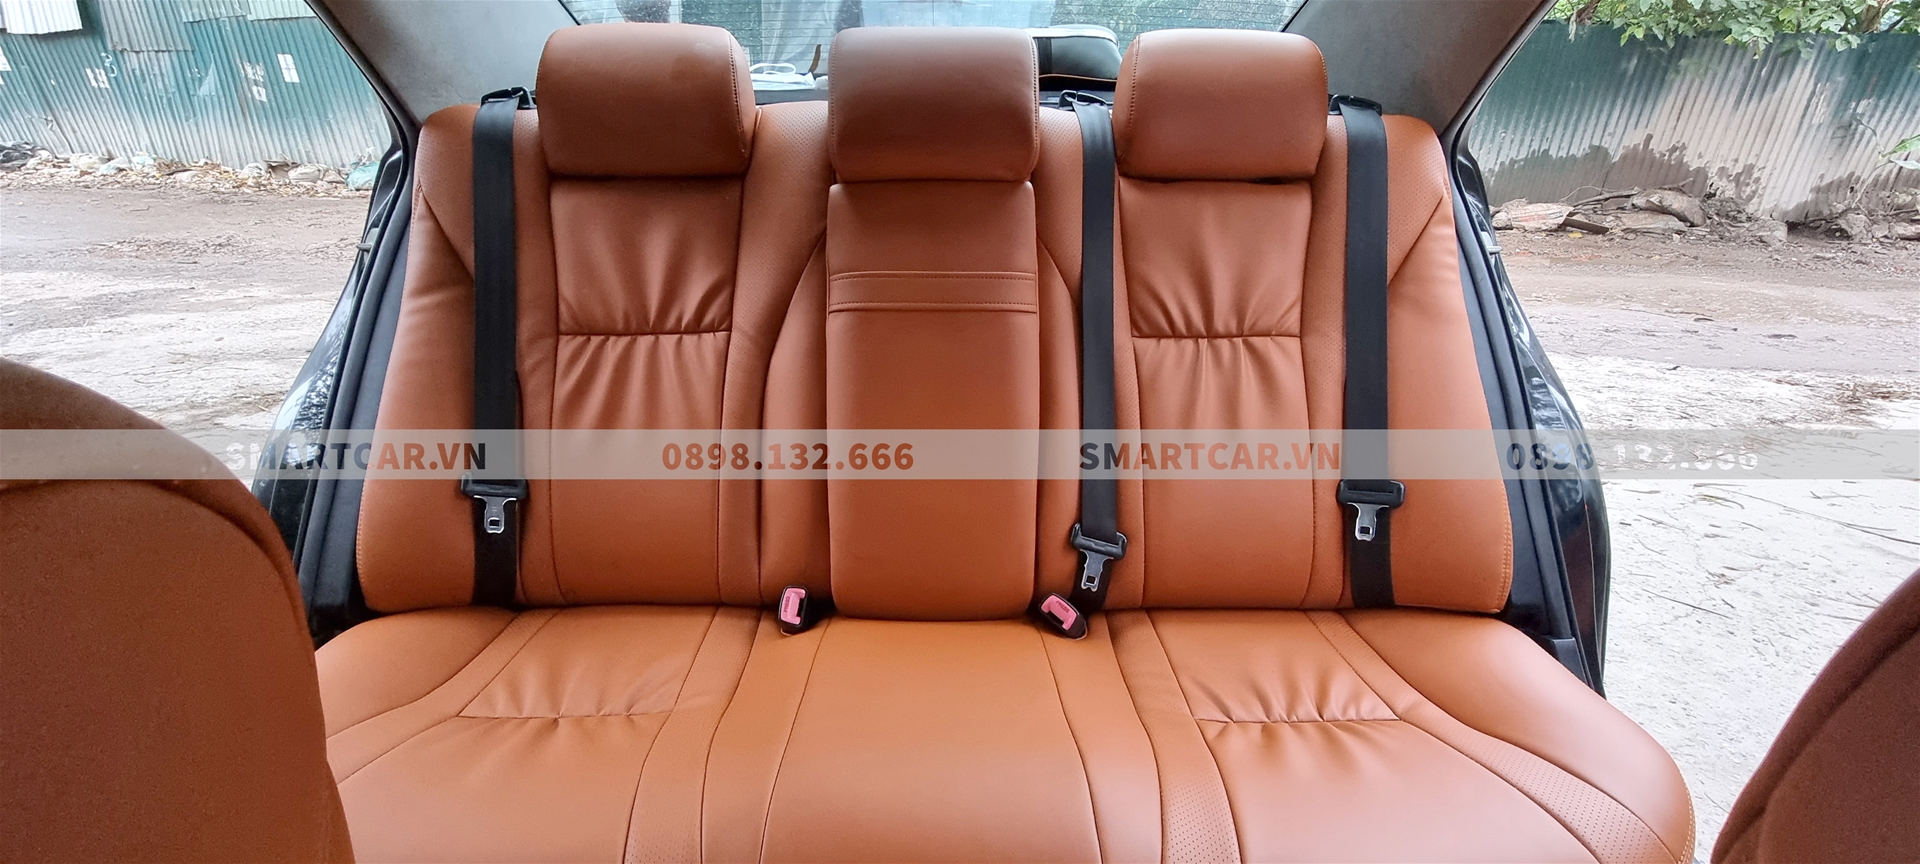 bọc ghế da Toyota Camry - hình 4